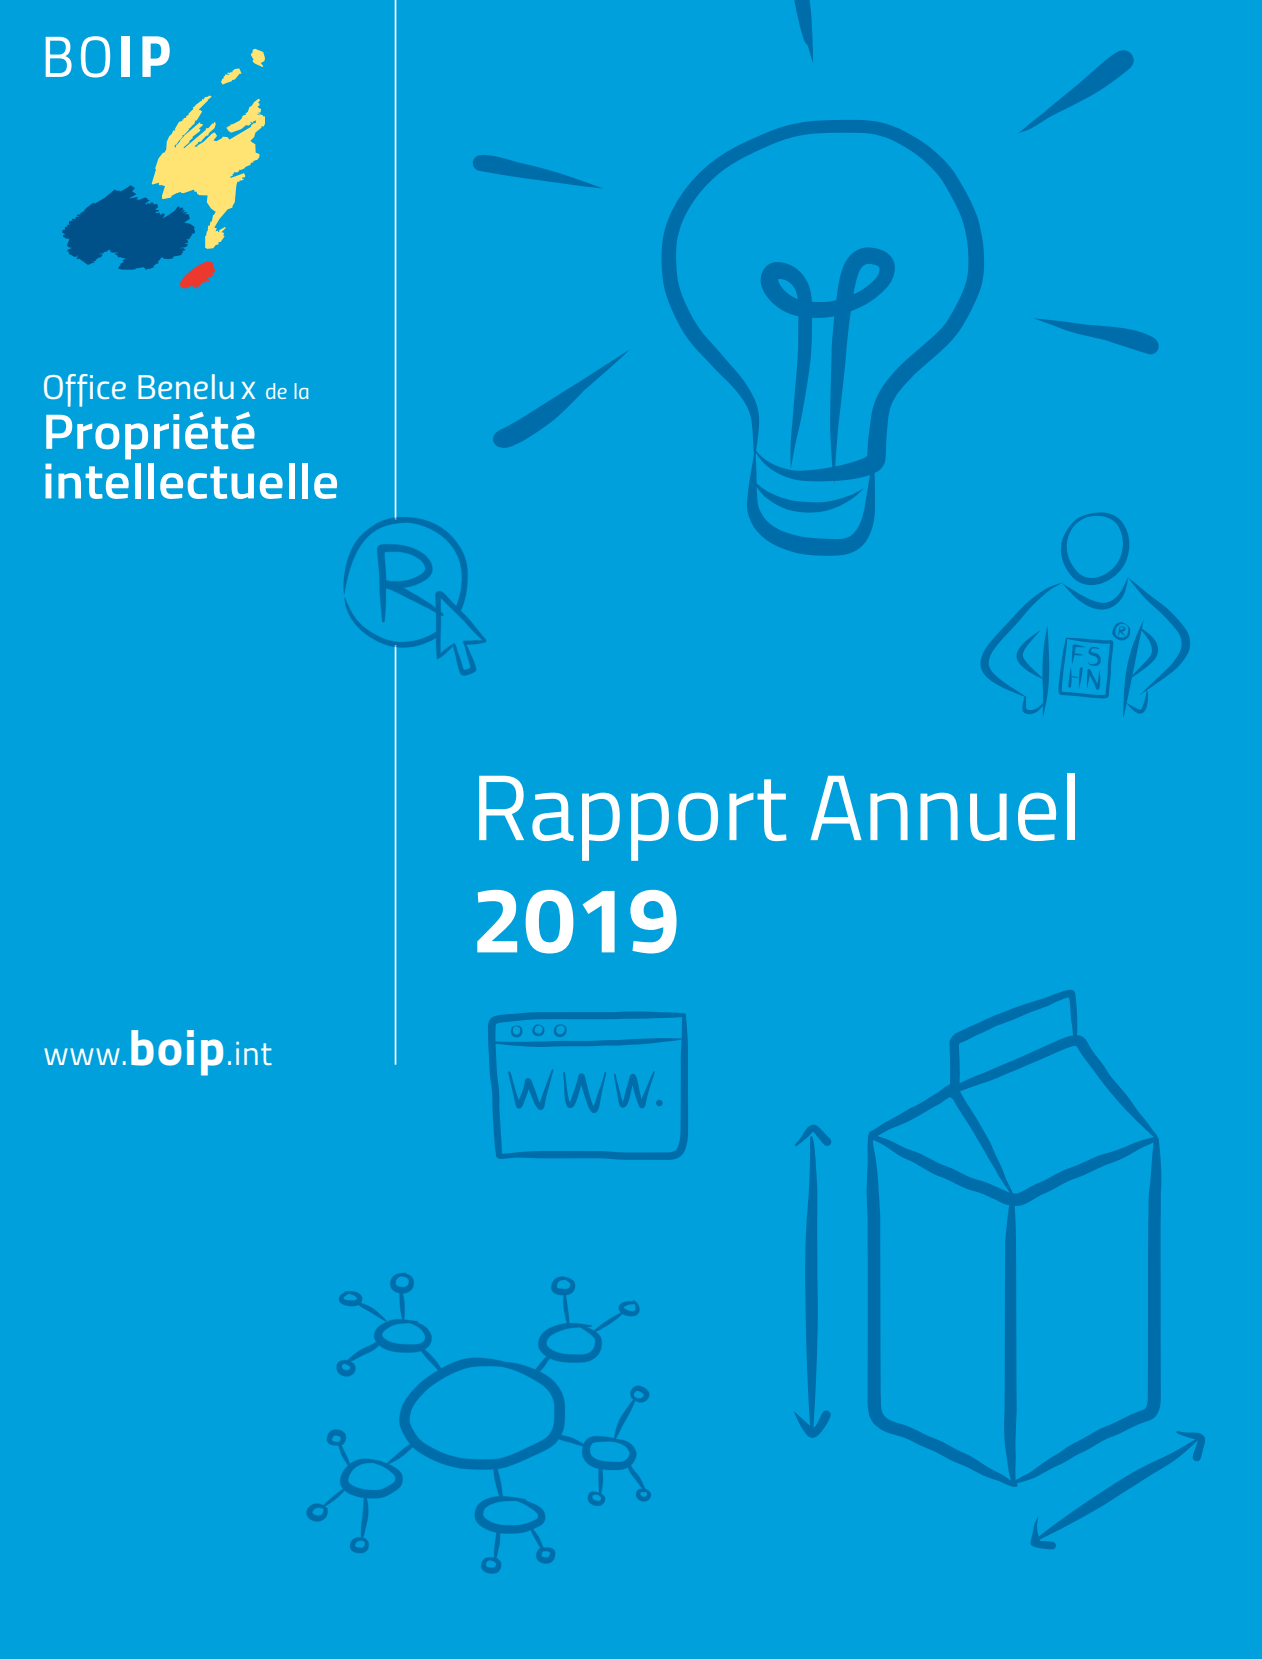 Rapport annual 2019